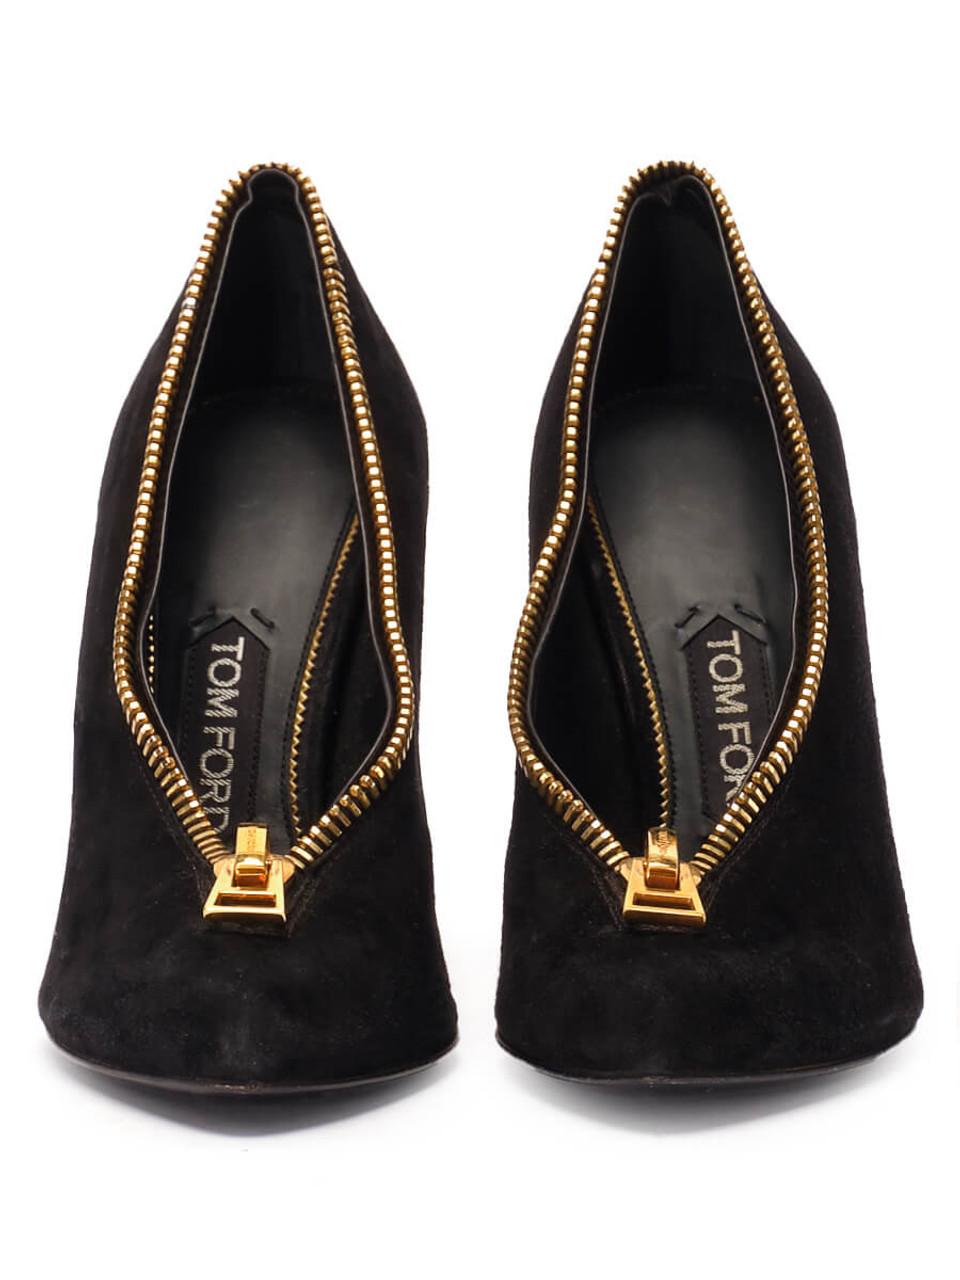 Women Tom Ford Zip Pump Heels -  Black Size 38.5 US 8.5